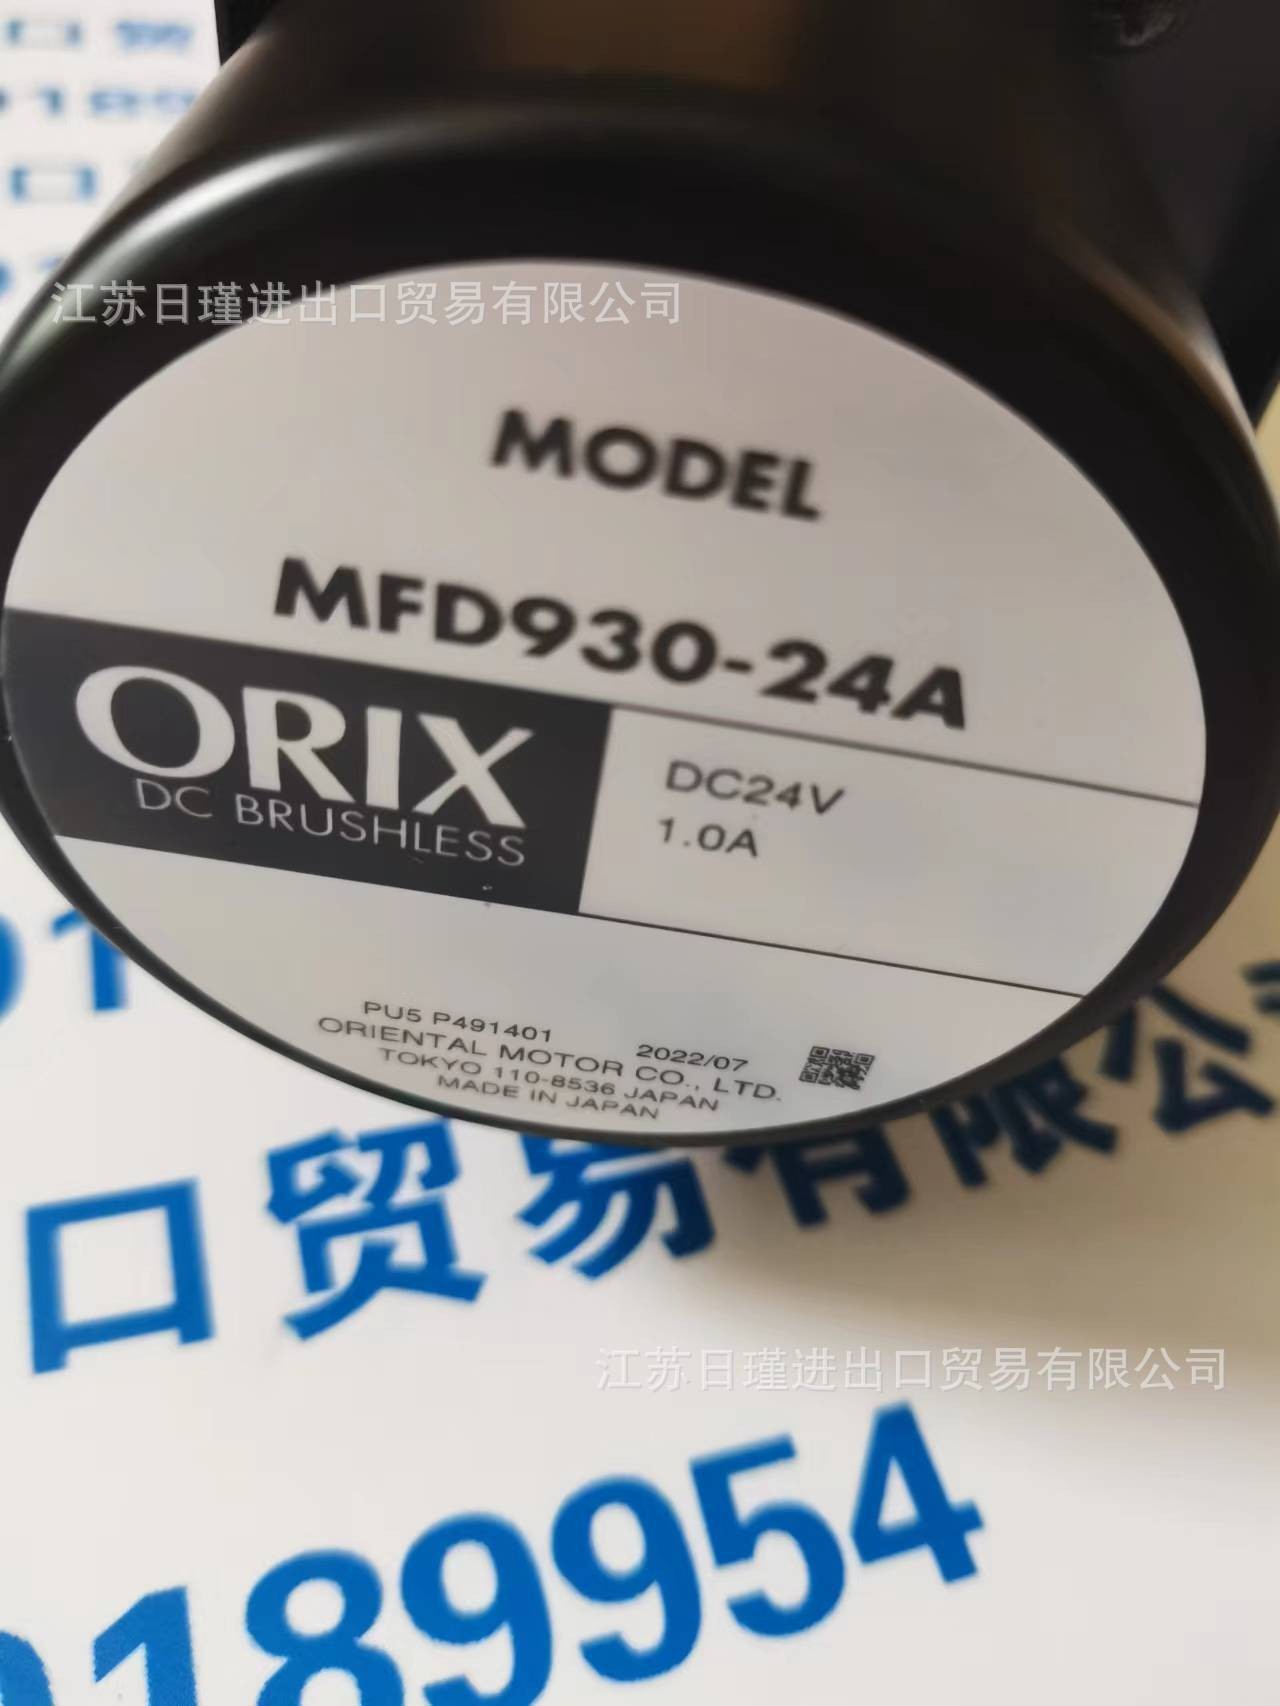 ORIX      MF930-DC  MFD930-24 MFD930-24